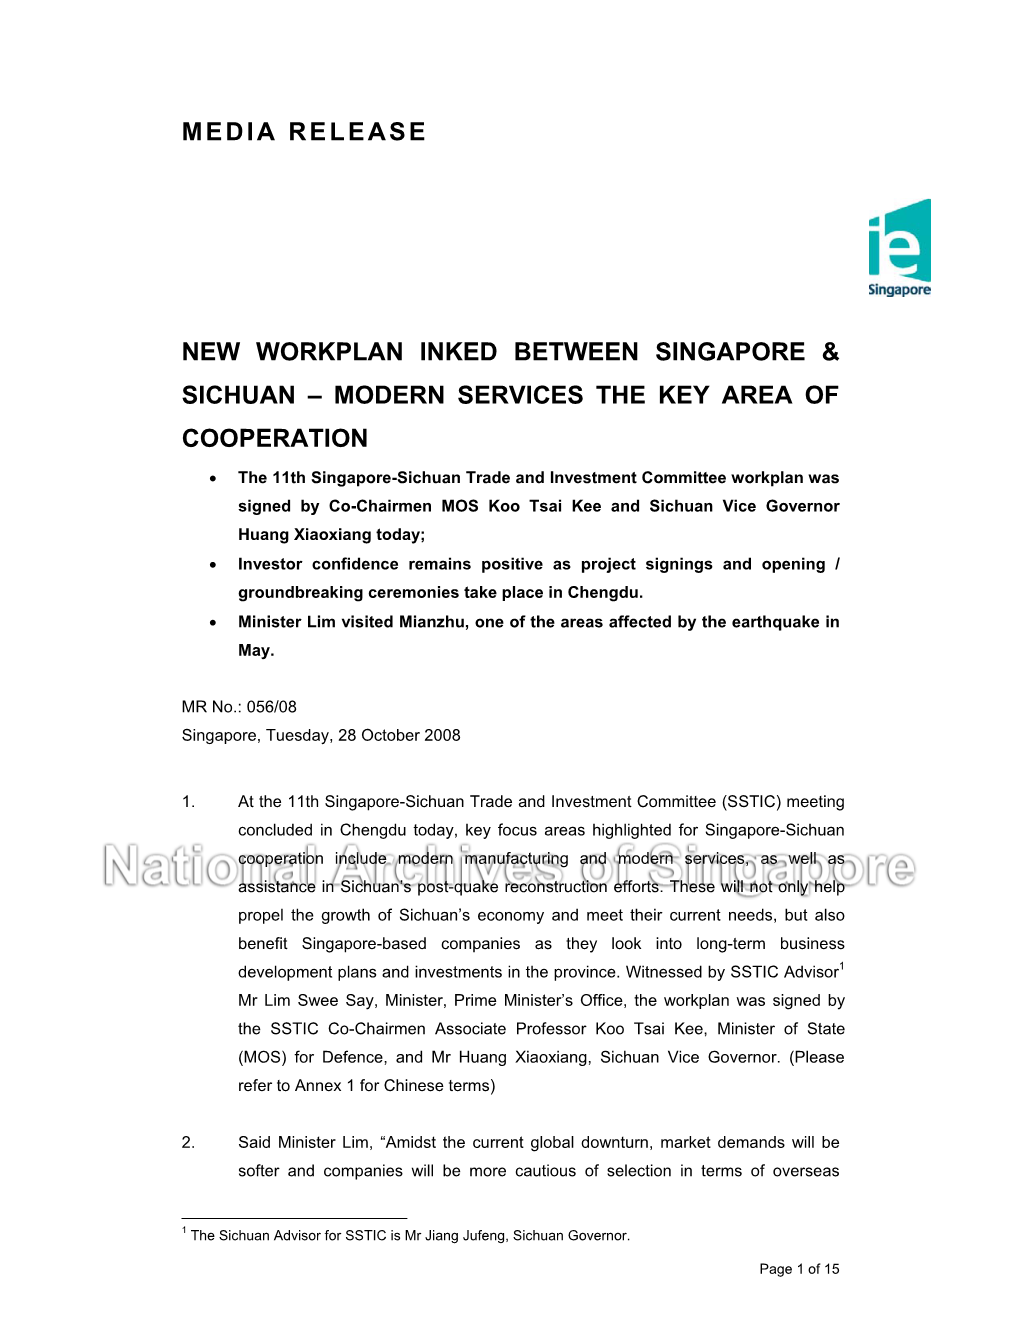 Media Release New Workplan Inked Between Singapore